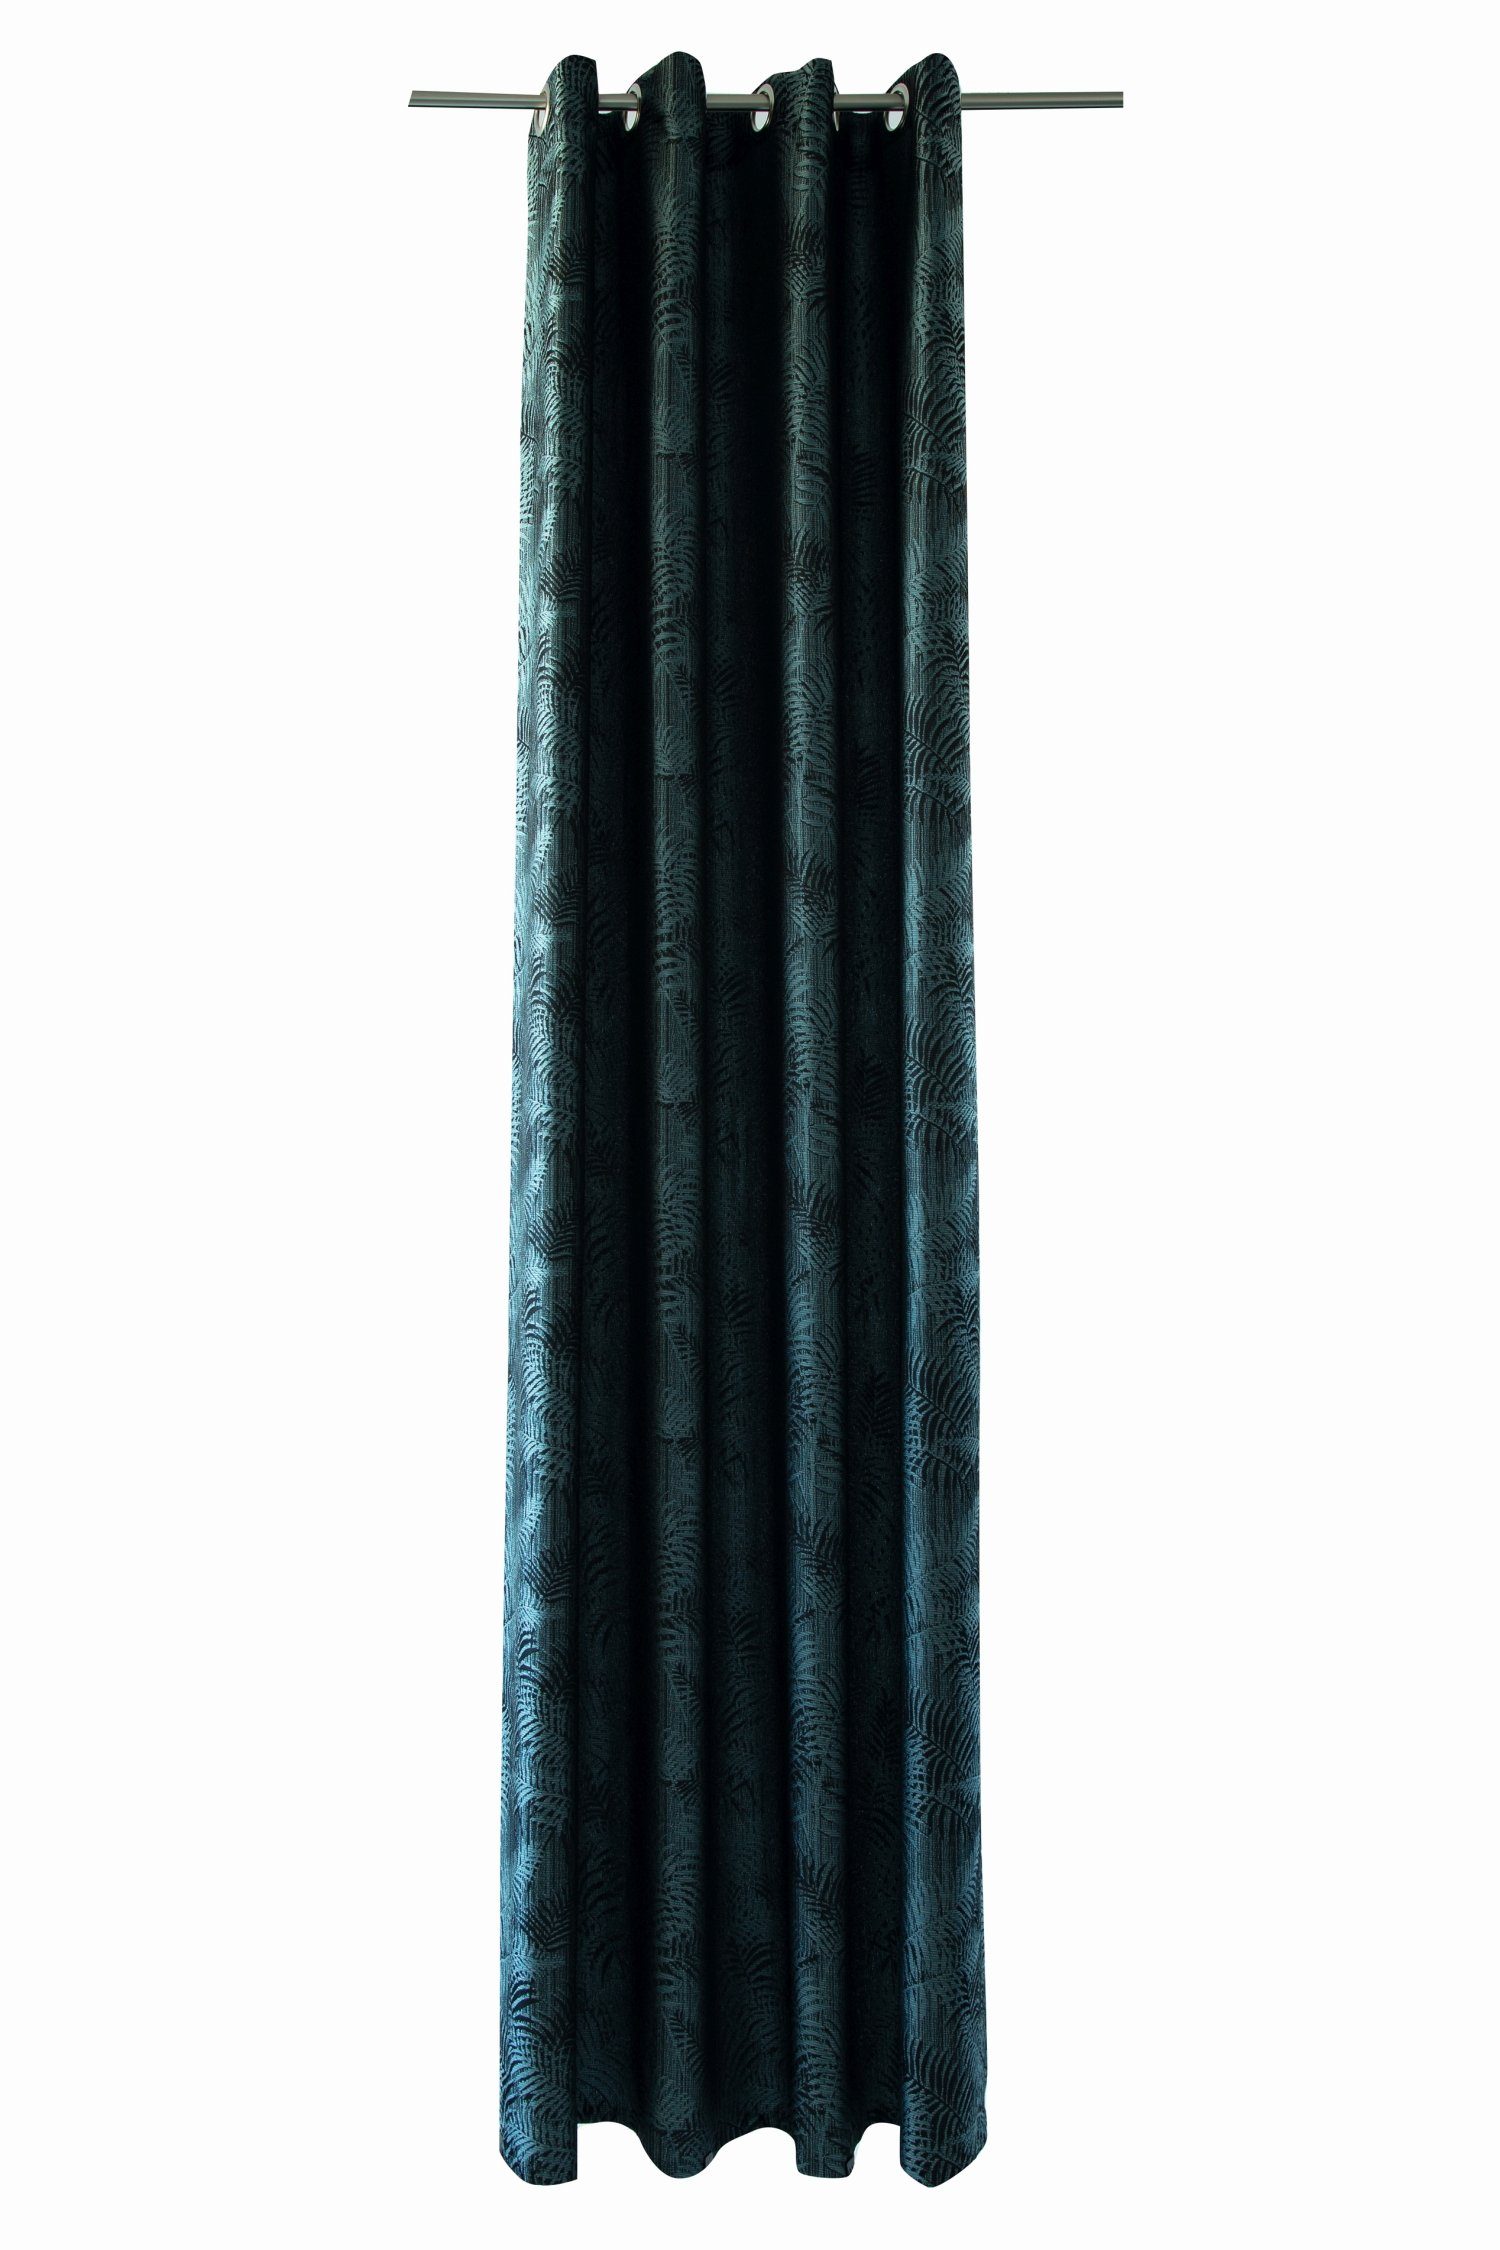 HOMING, Ösenschal Lichtschutz, petrol Bali Farbe: 140x245cm Vorhang,